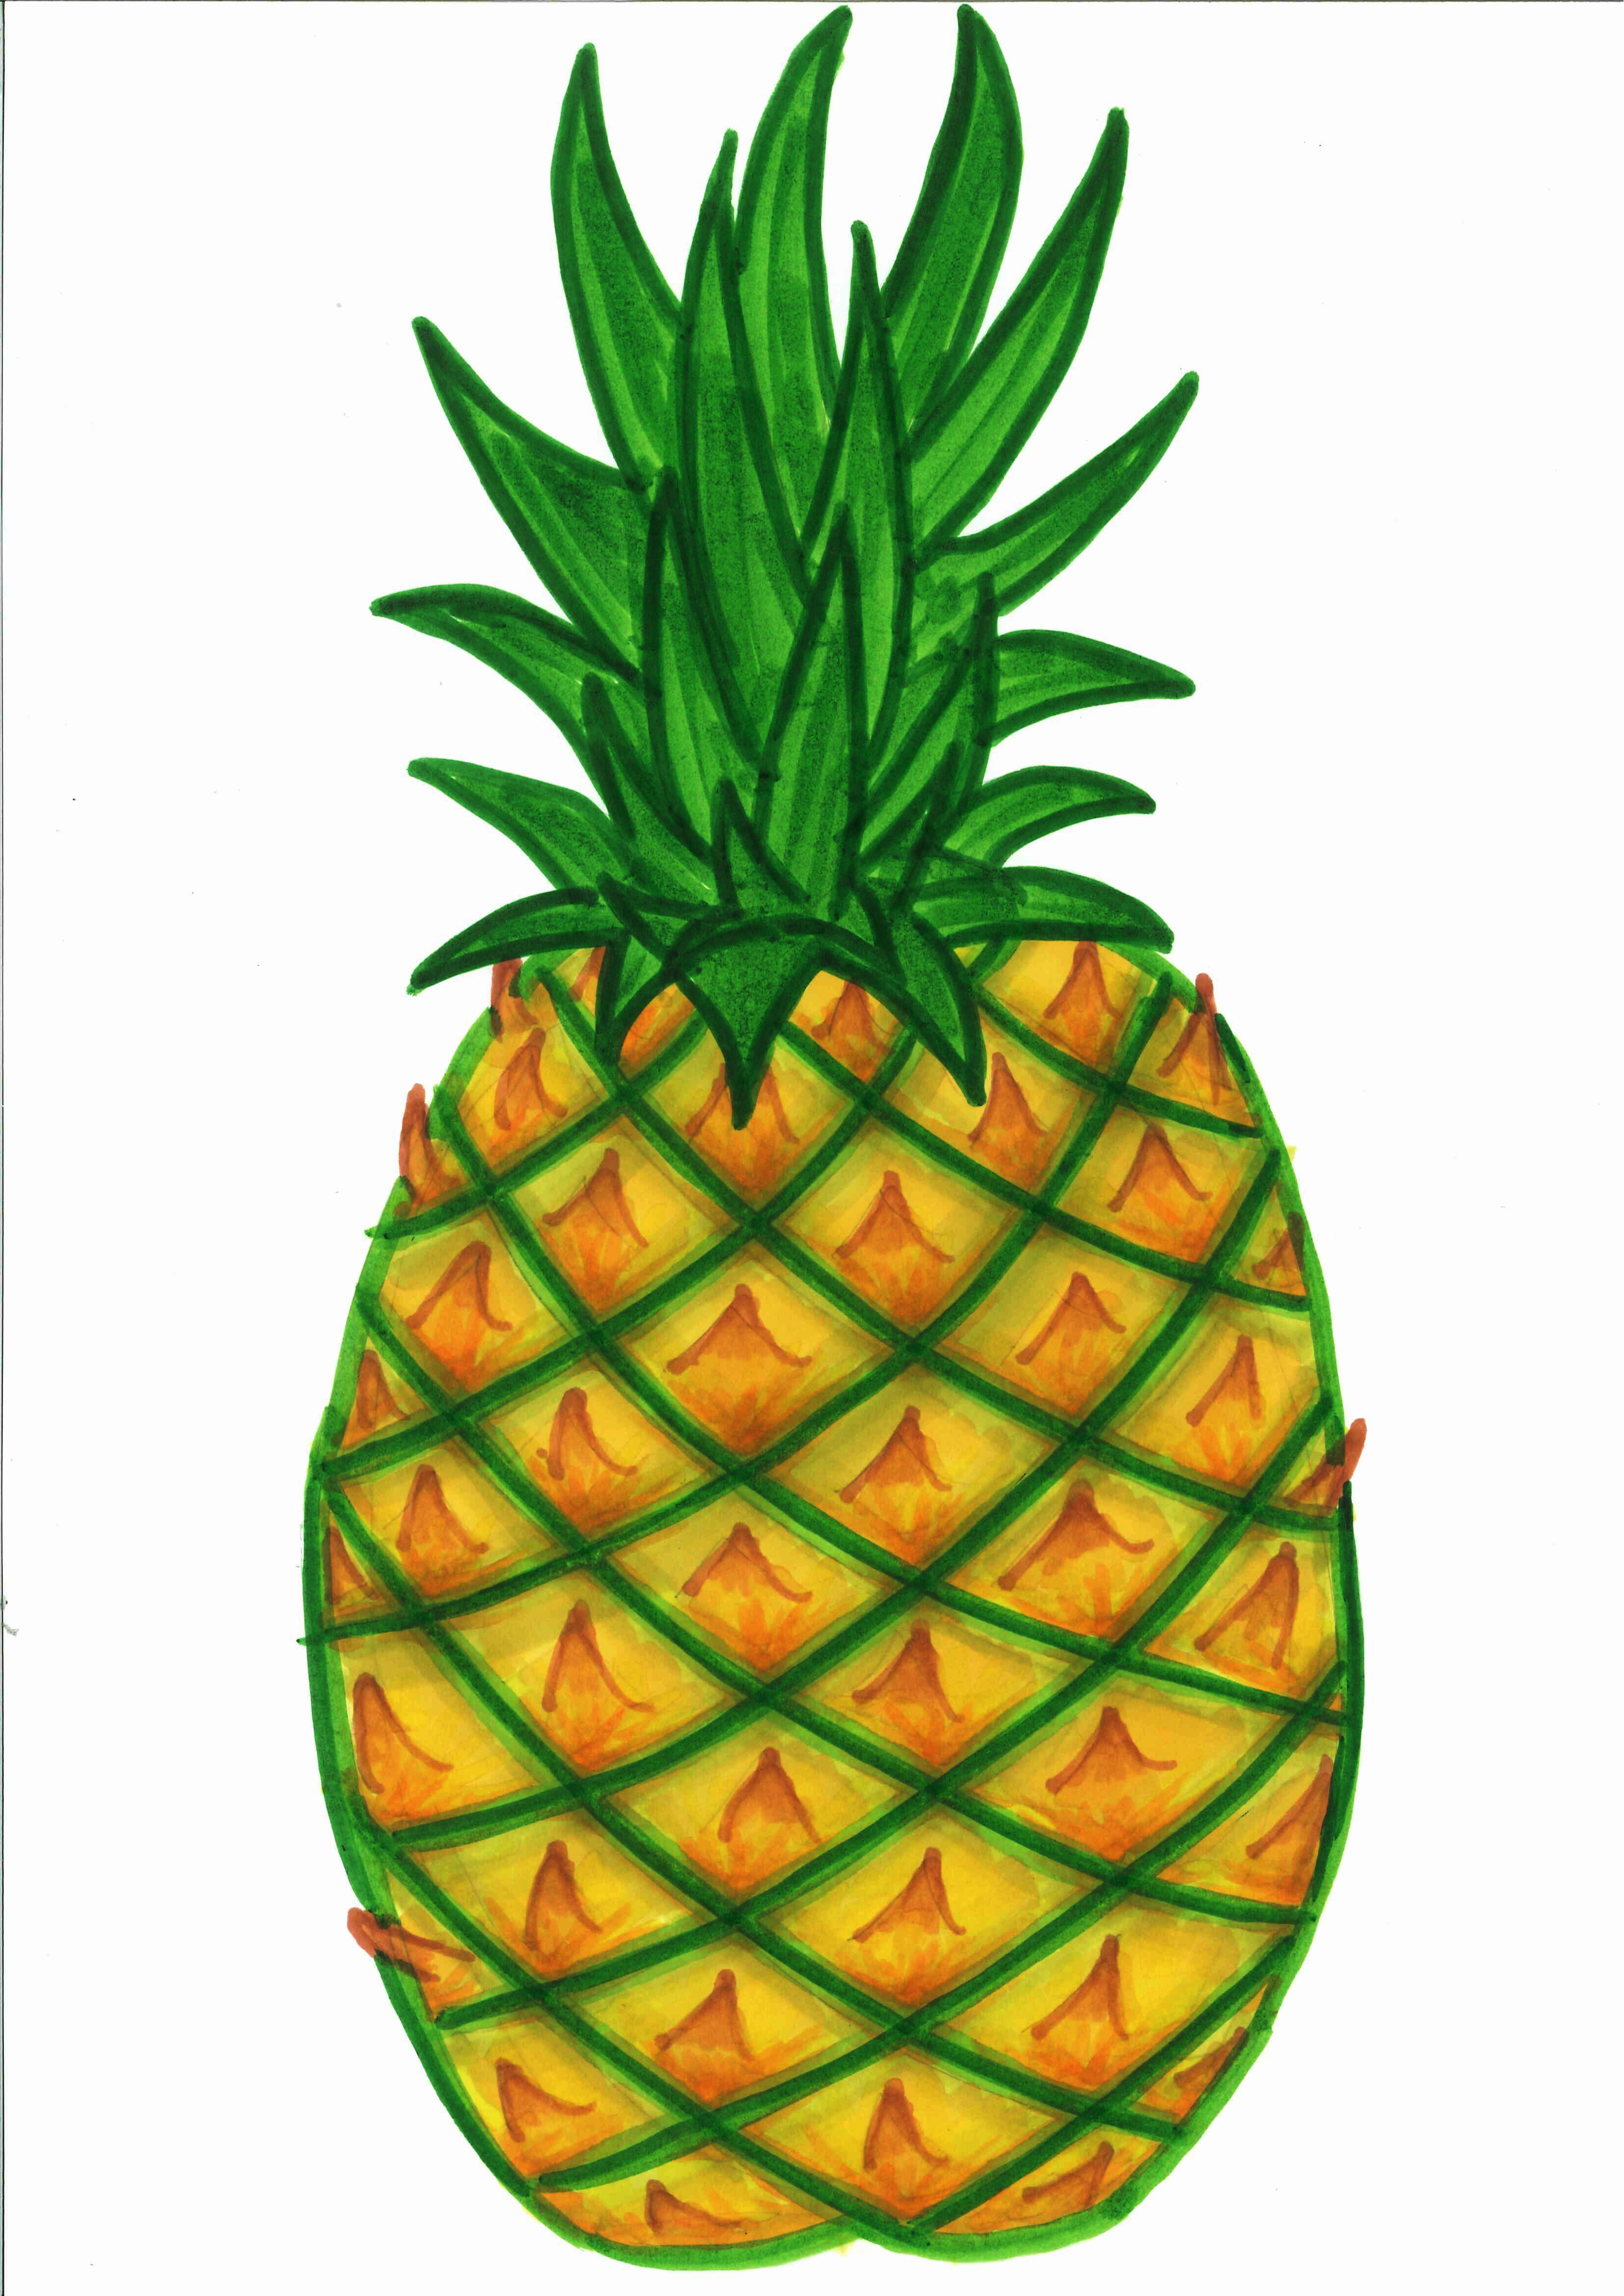 Free Pineapples Clip Art